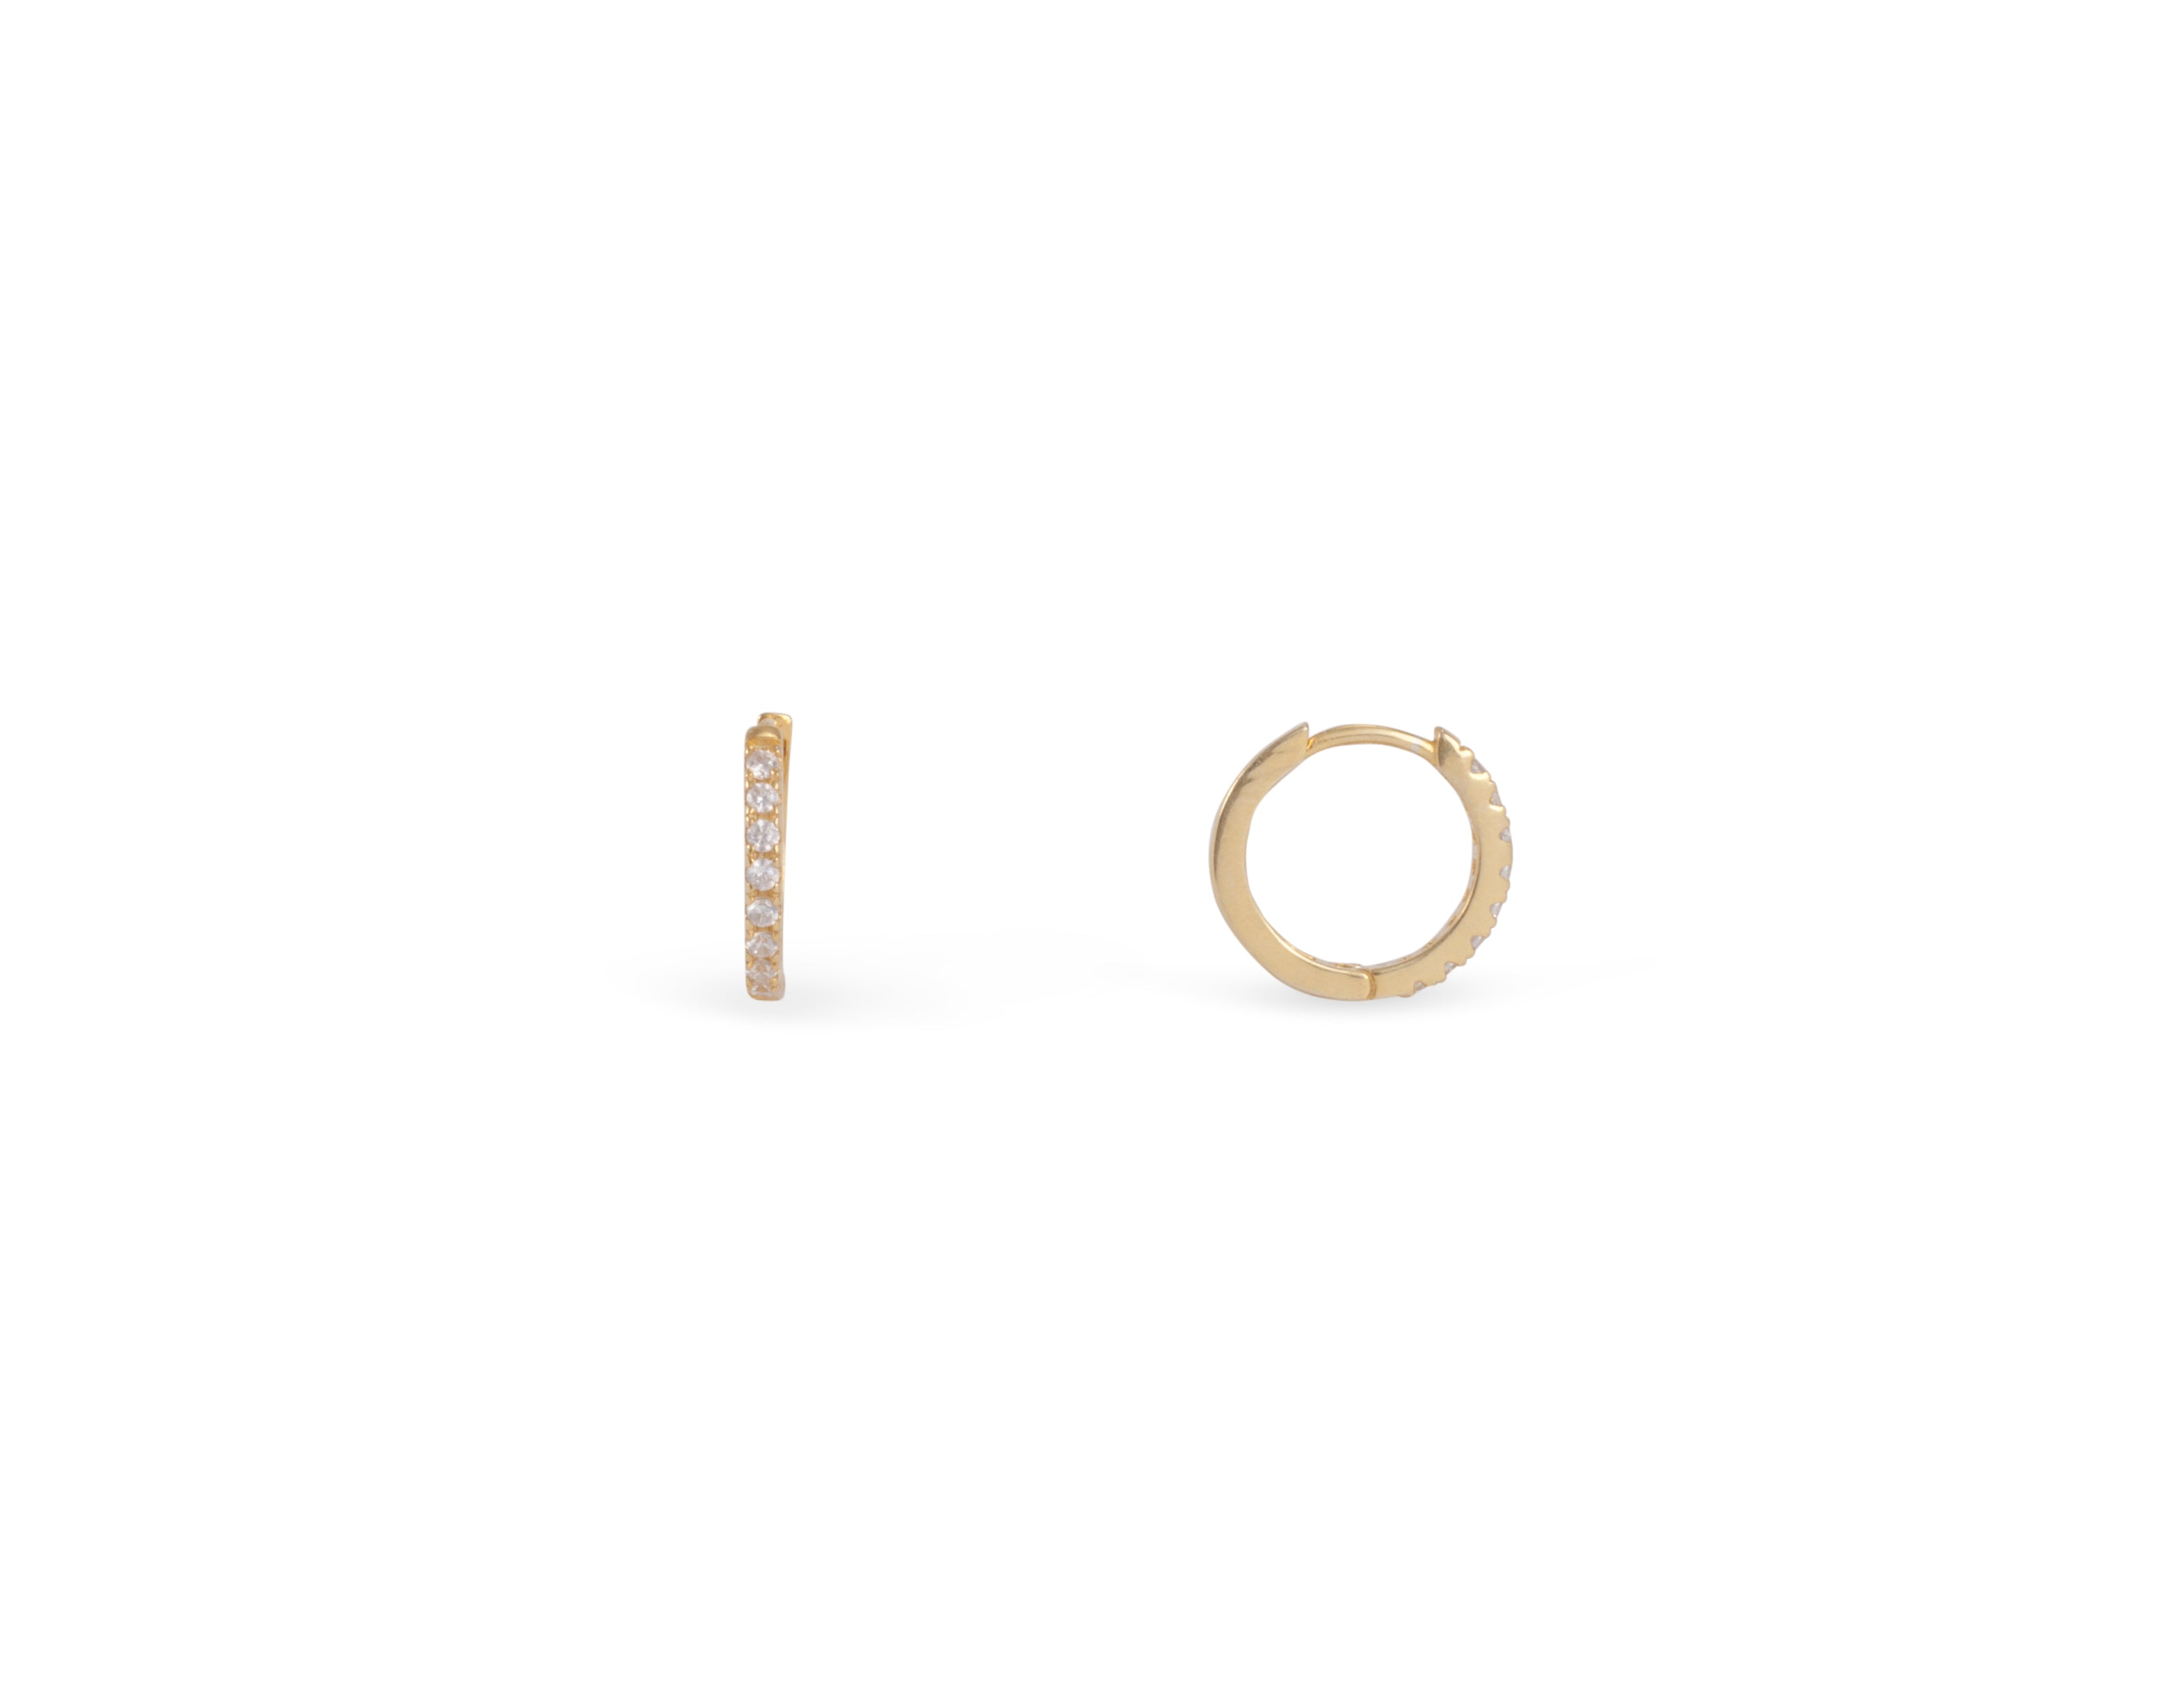 Gold Huggie hoop earrings with pave cz